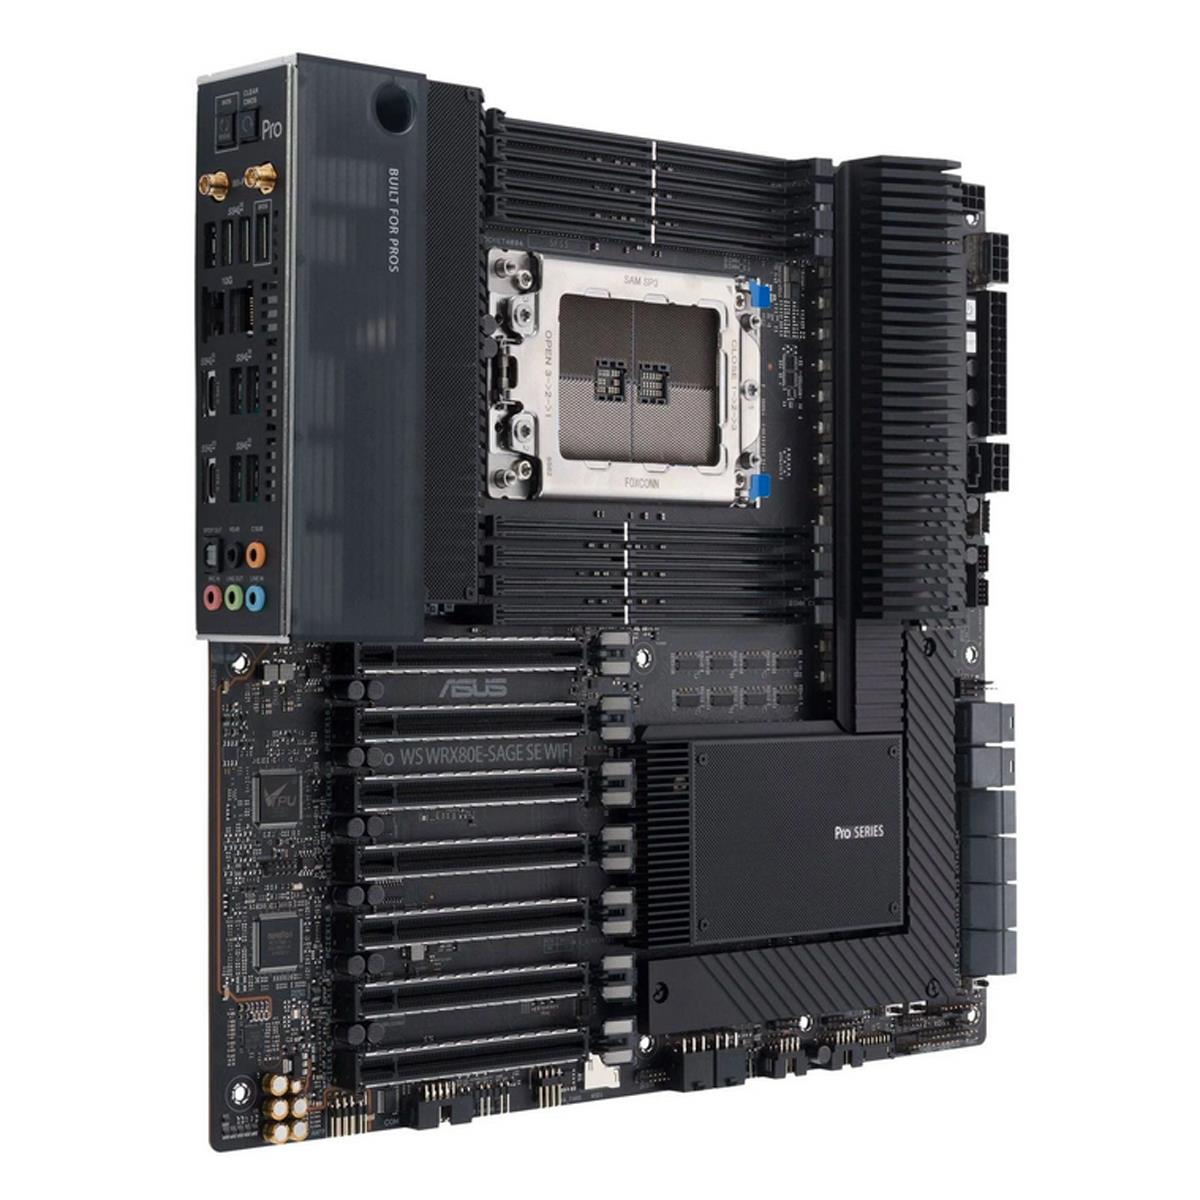 Image of ASUS Pro WS WRX80E-SAGE SE Wi-Fi AMD Ryzen Threadripper PRO E-ATX Motherboard